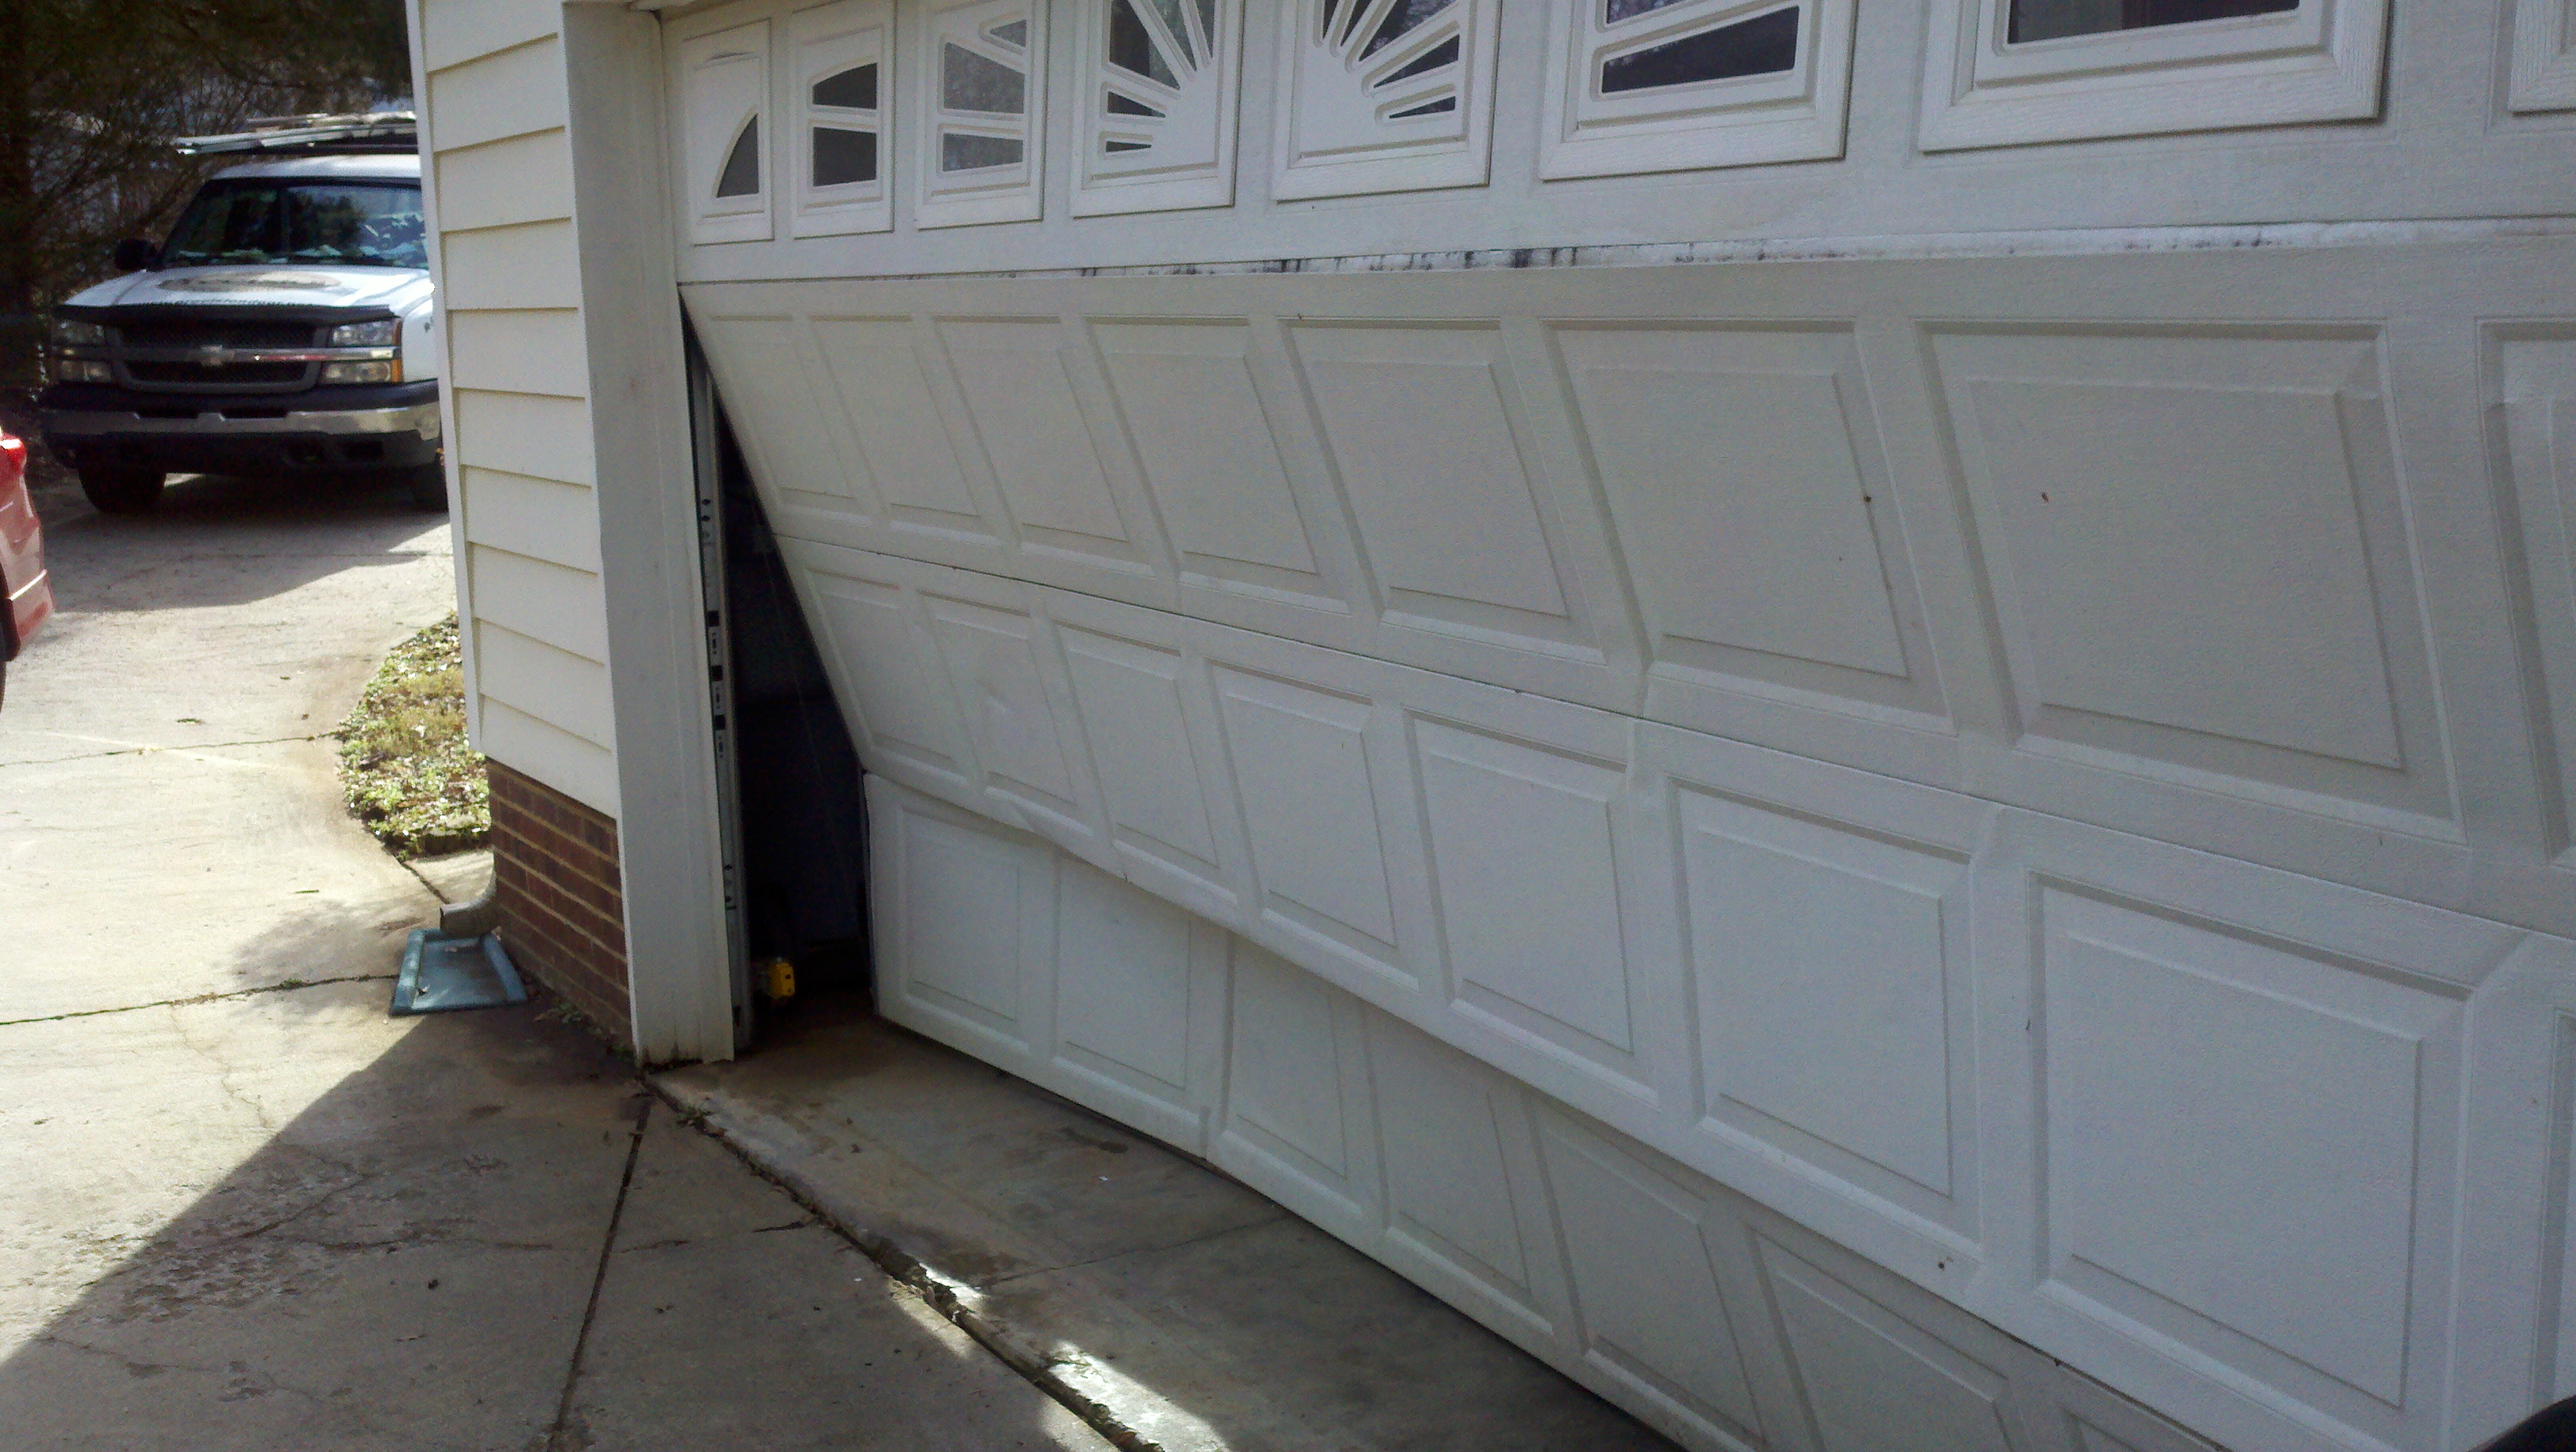 Wayne-Dalton Overhead Garage Doors Repair in Charlotte - DamageD Garage Door Sections